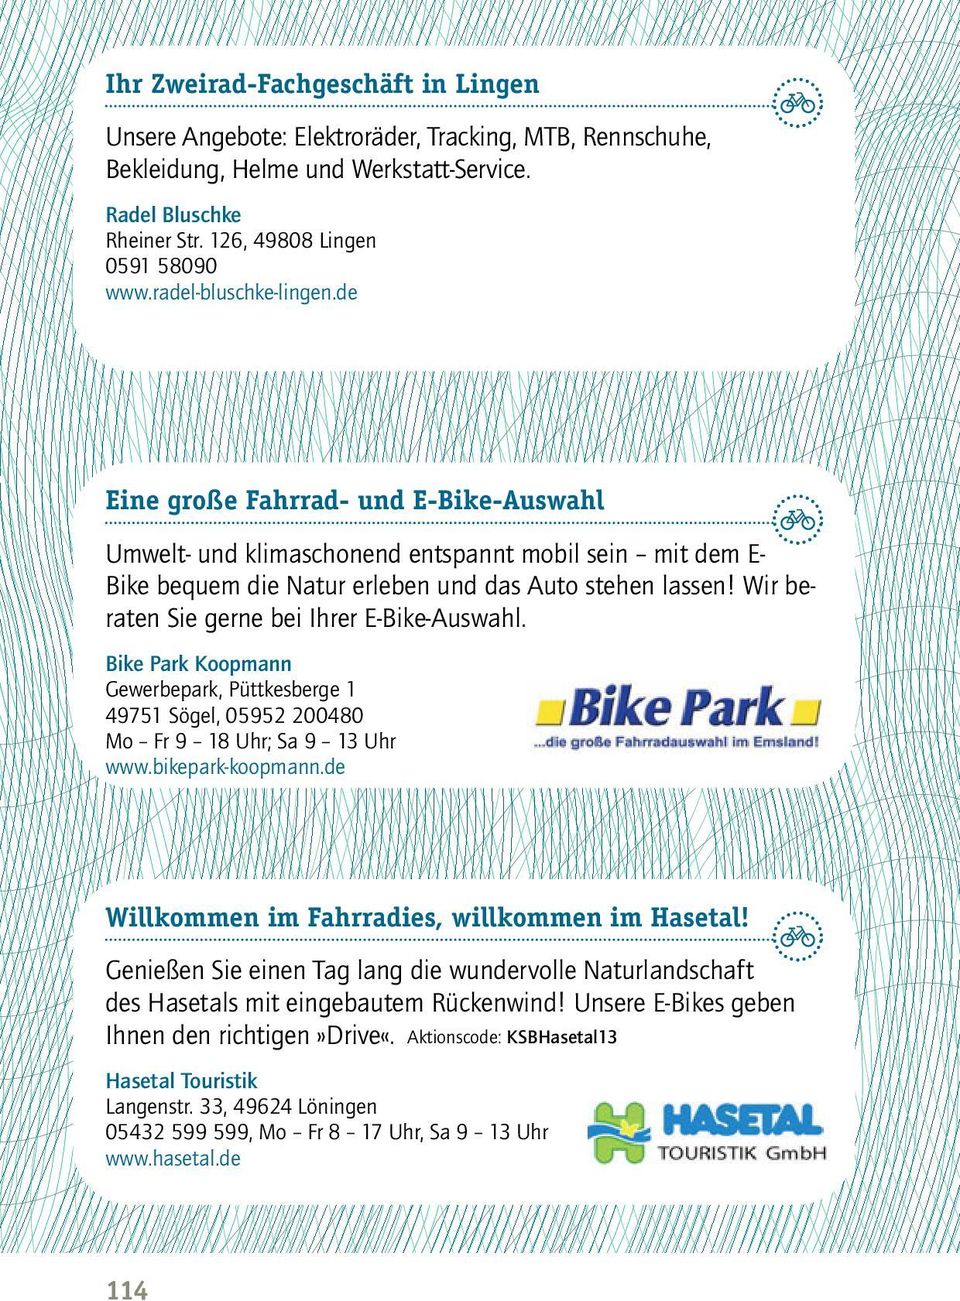 Wir beraten Sie gerne bei Ihrer E-Bike-Auswahl. Bike Park Koopmann Gewerbepark, Püttkesberge 1 49751 Sögel, 05952 200480 Mo Fr 9 18 Uhr; Sa 9 13 Uhr www.bikepark-koopmann.